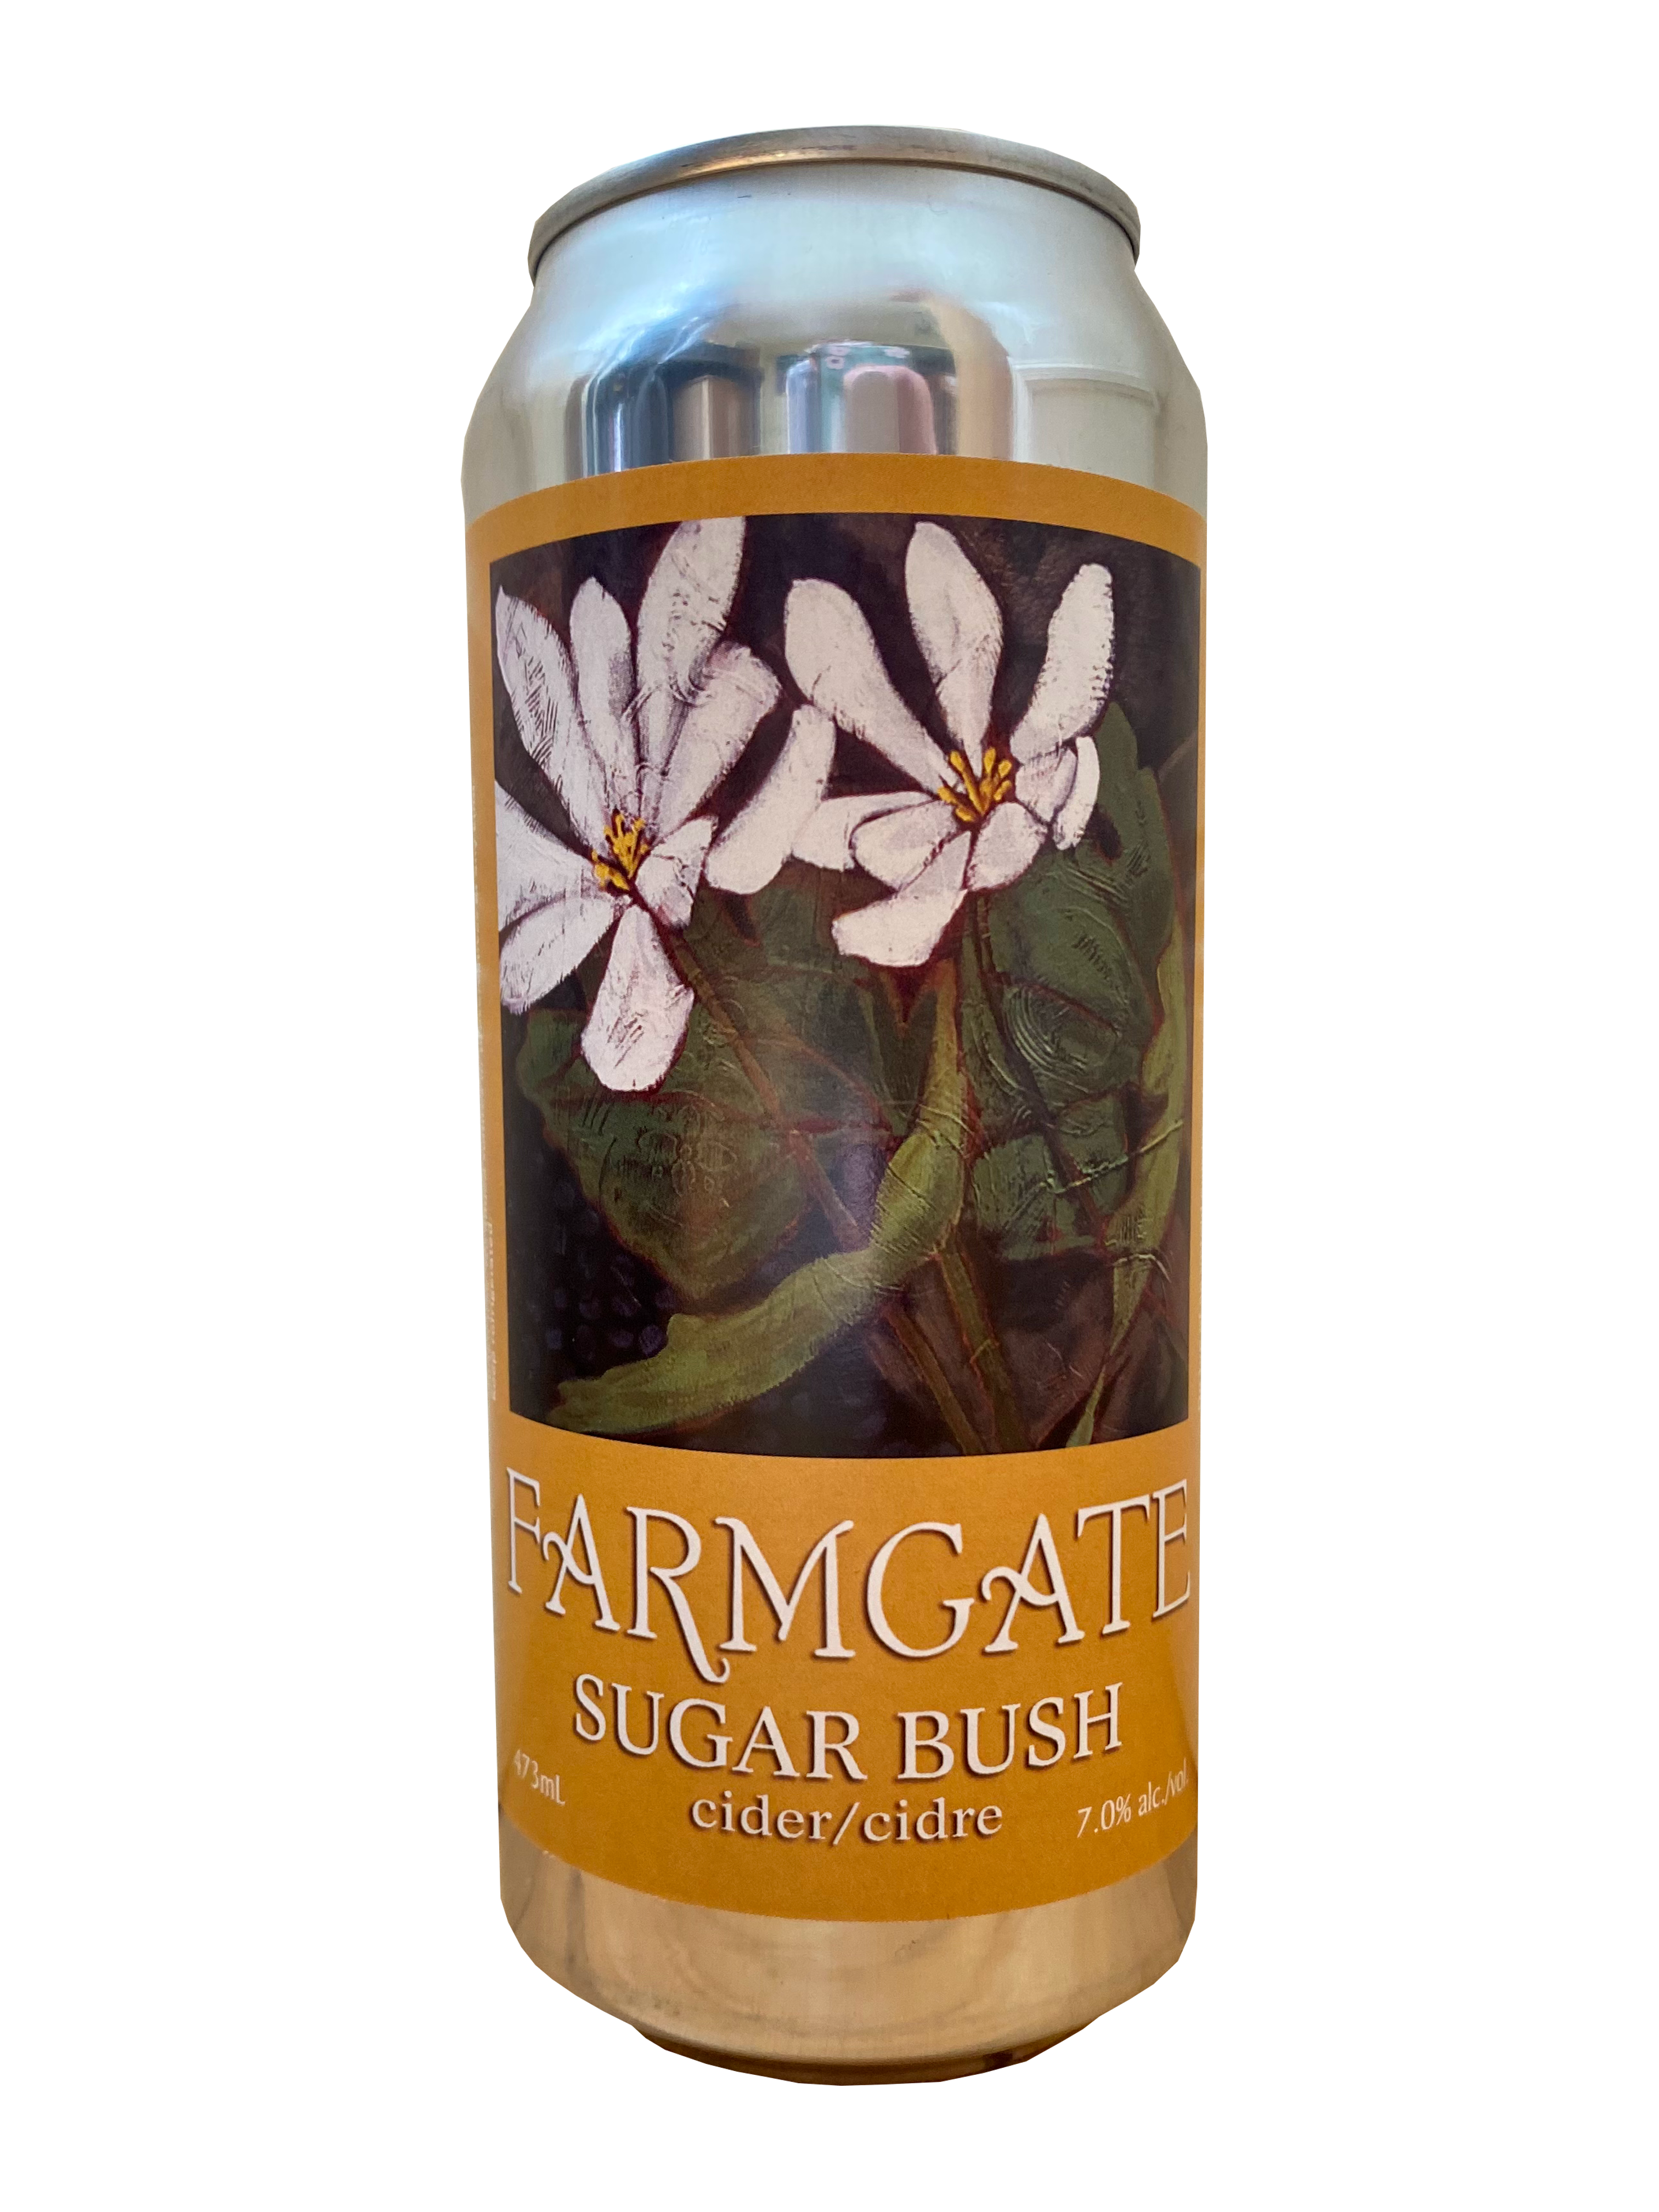 Sugar Bush Craft Cider - Farmgate Cider